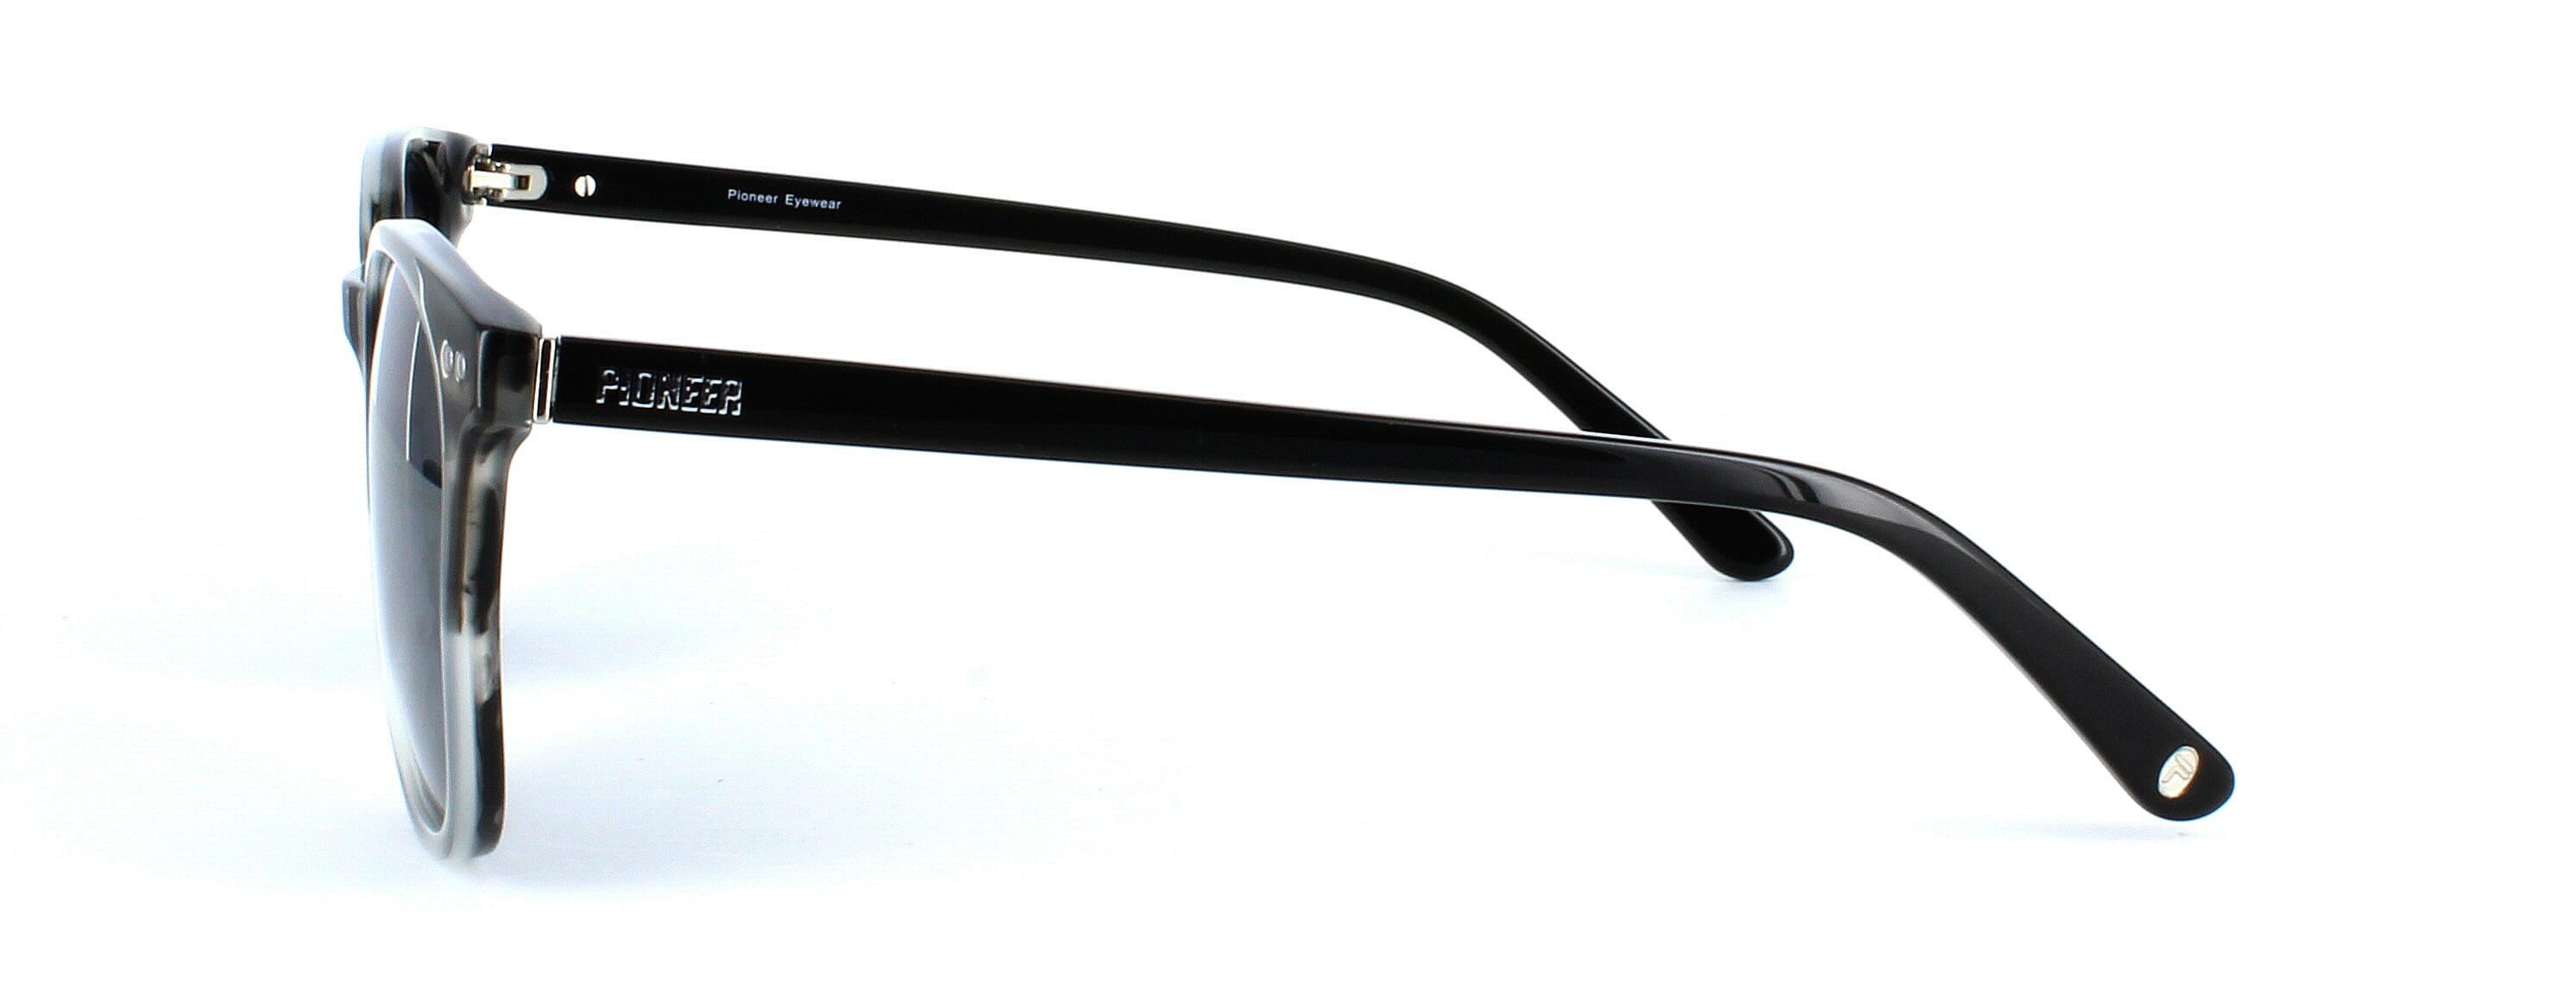 Aurelia - acetate prescription sunglasses for women - round shaped lenses - image view 3